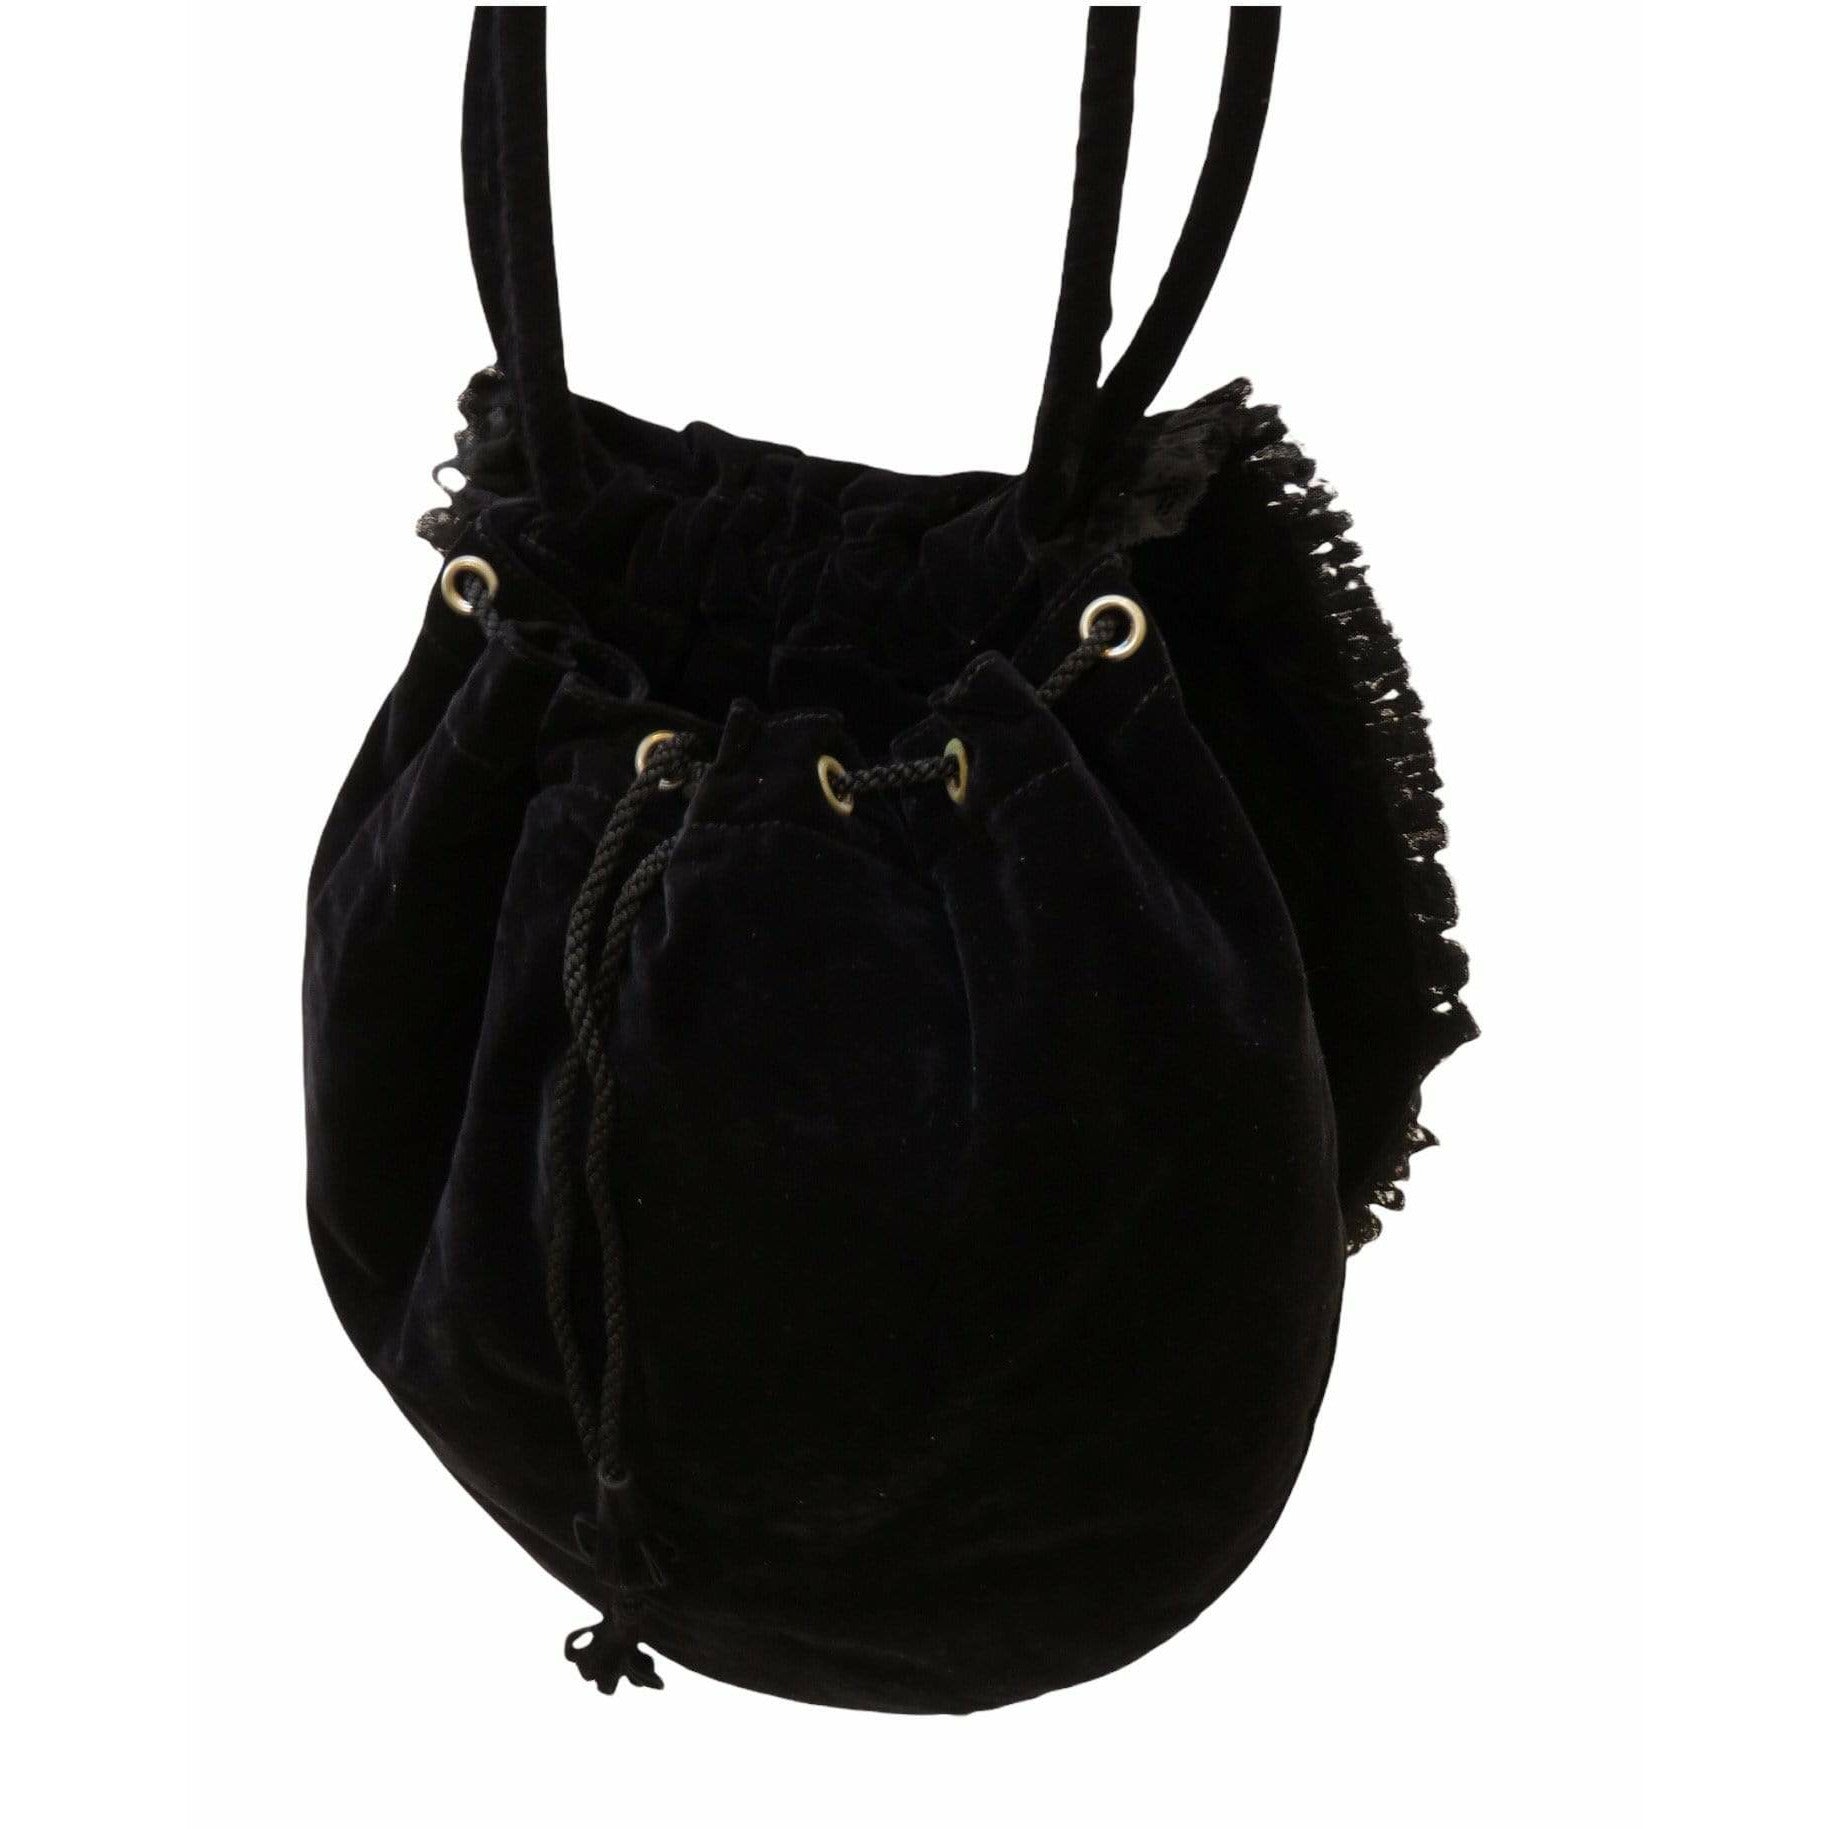 Handbags chantal-thomass-velvet-and-lace-ruffle-round-shoulder-bag Black